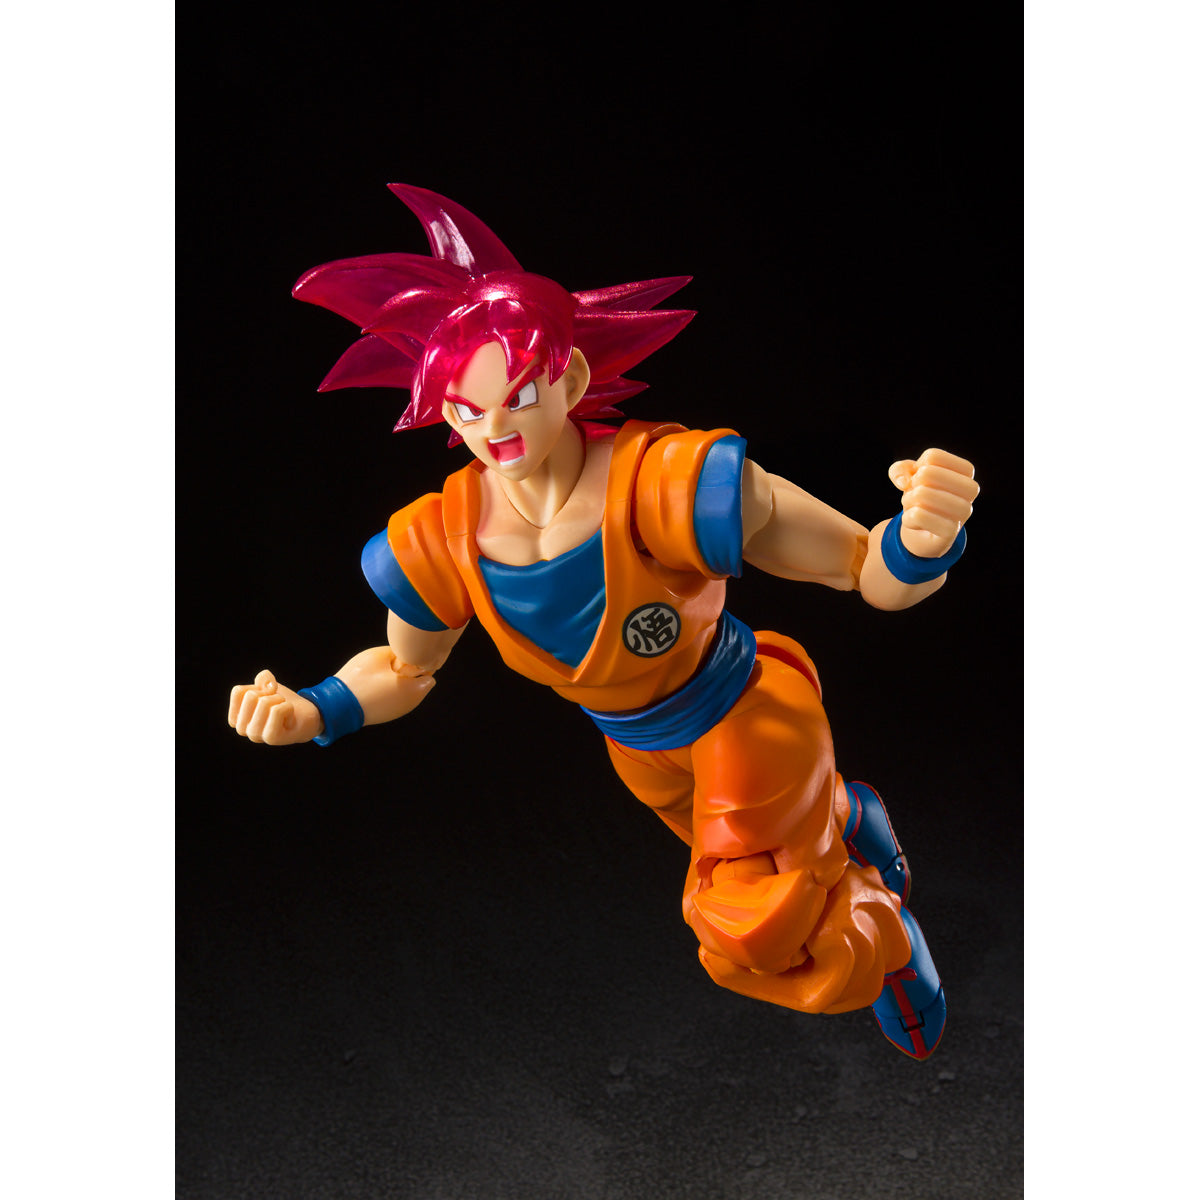 Dragon Ball Z S.H.Figuarts Super Saiyan God Goku -Event Exclusive Color Edition